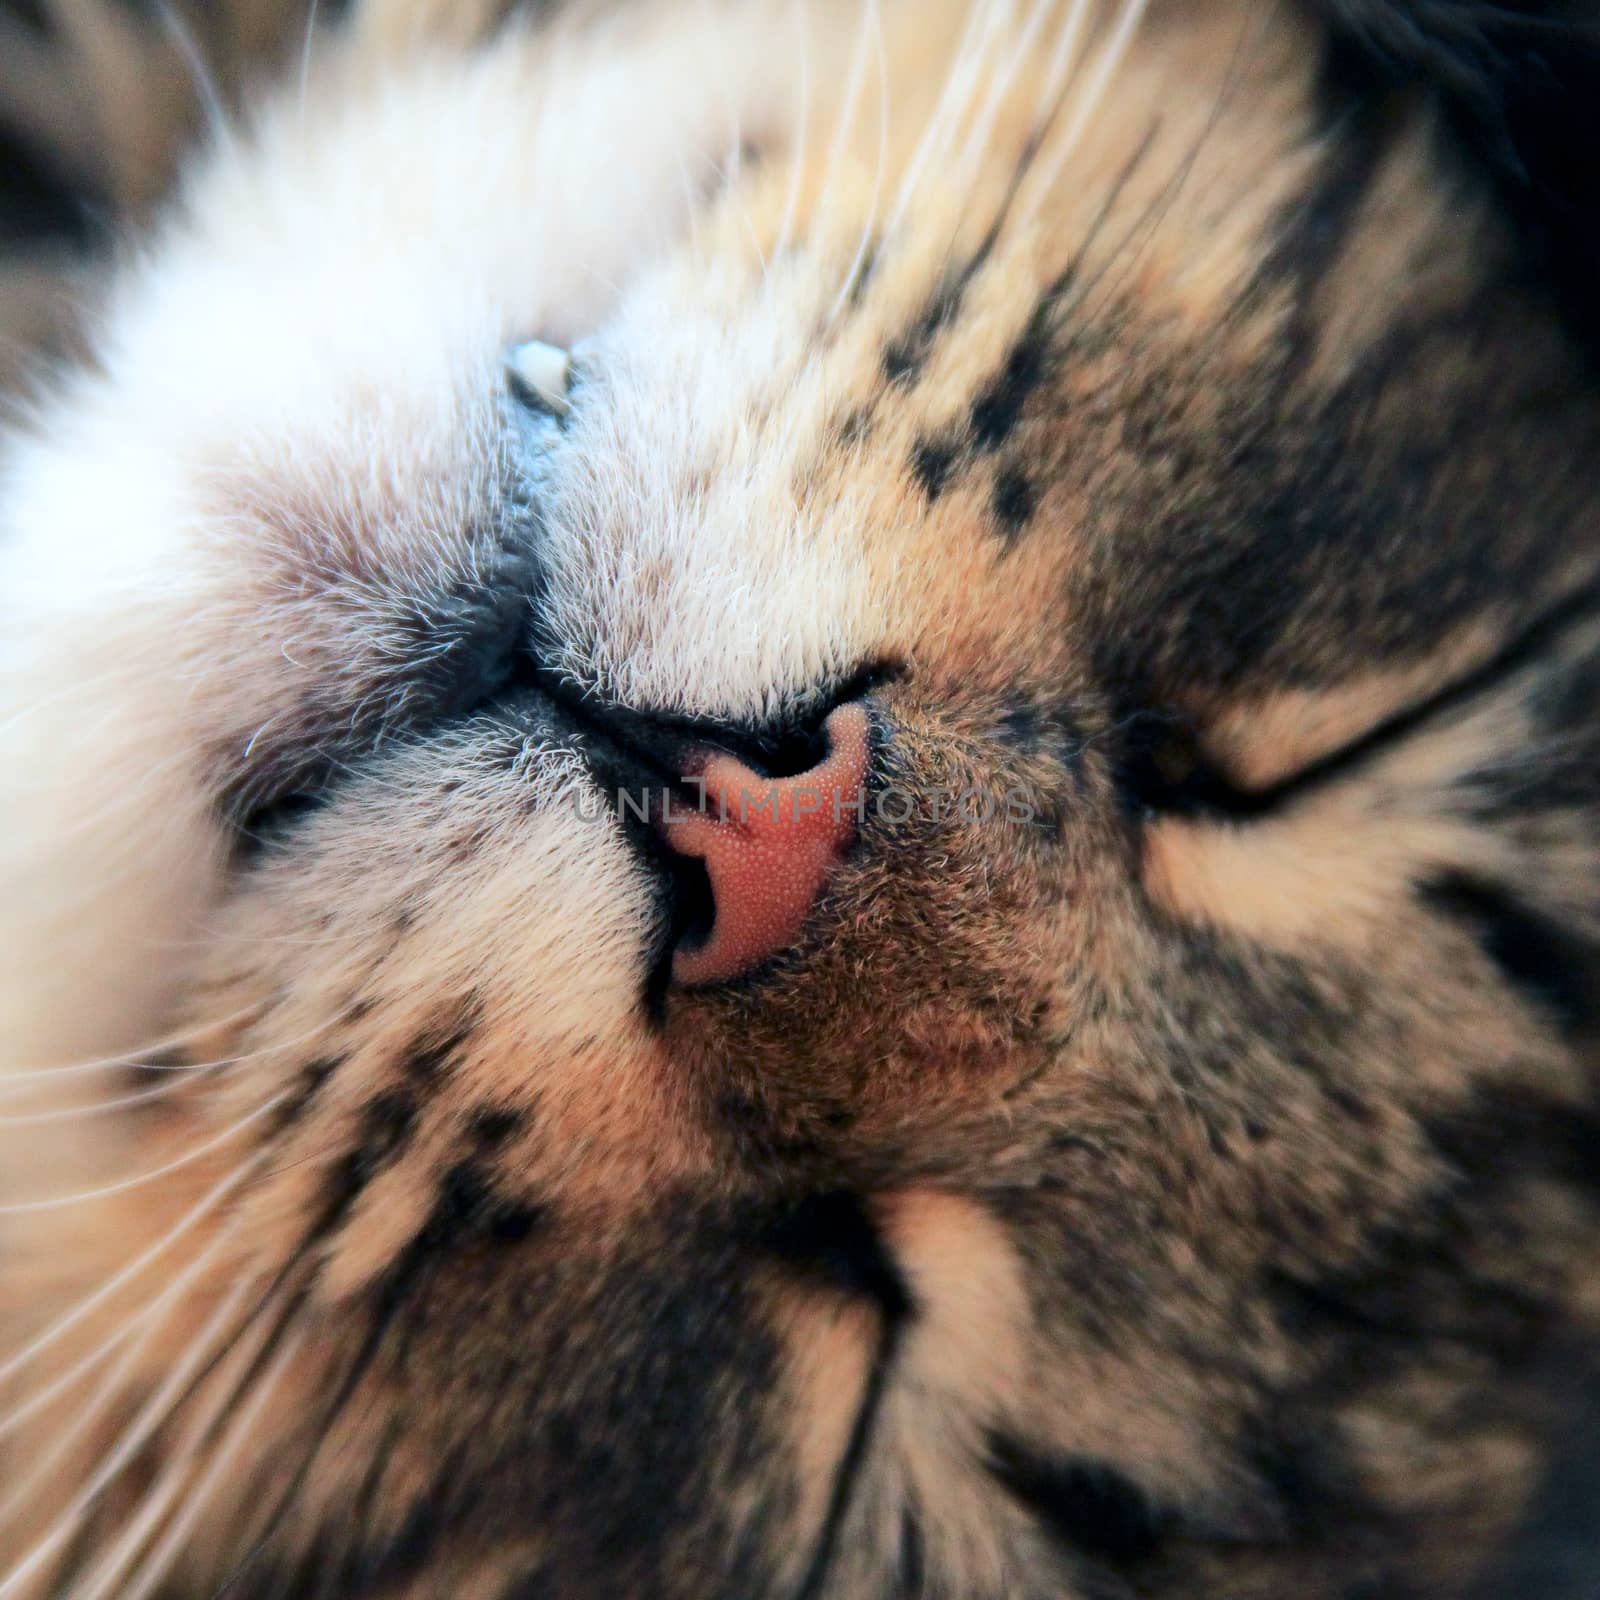 sleeping striped cat. photo by Irinavk